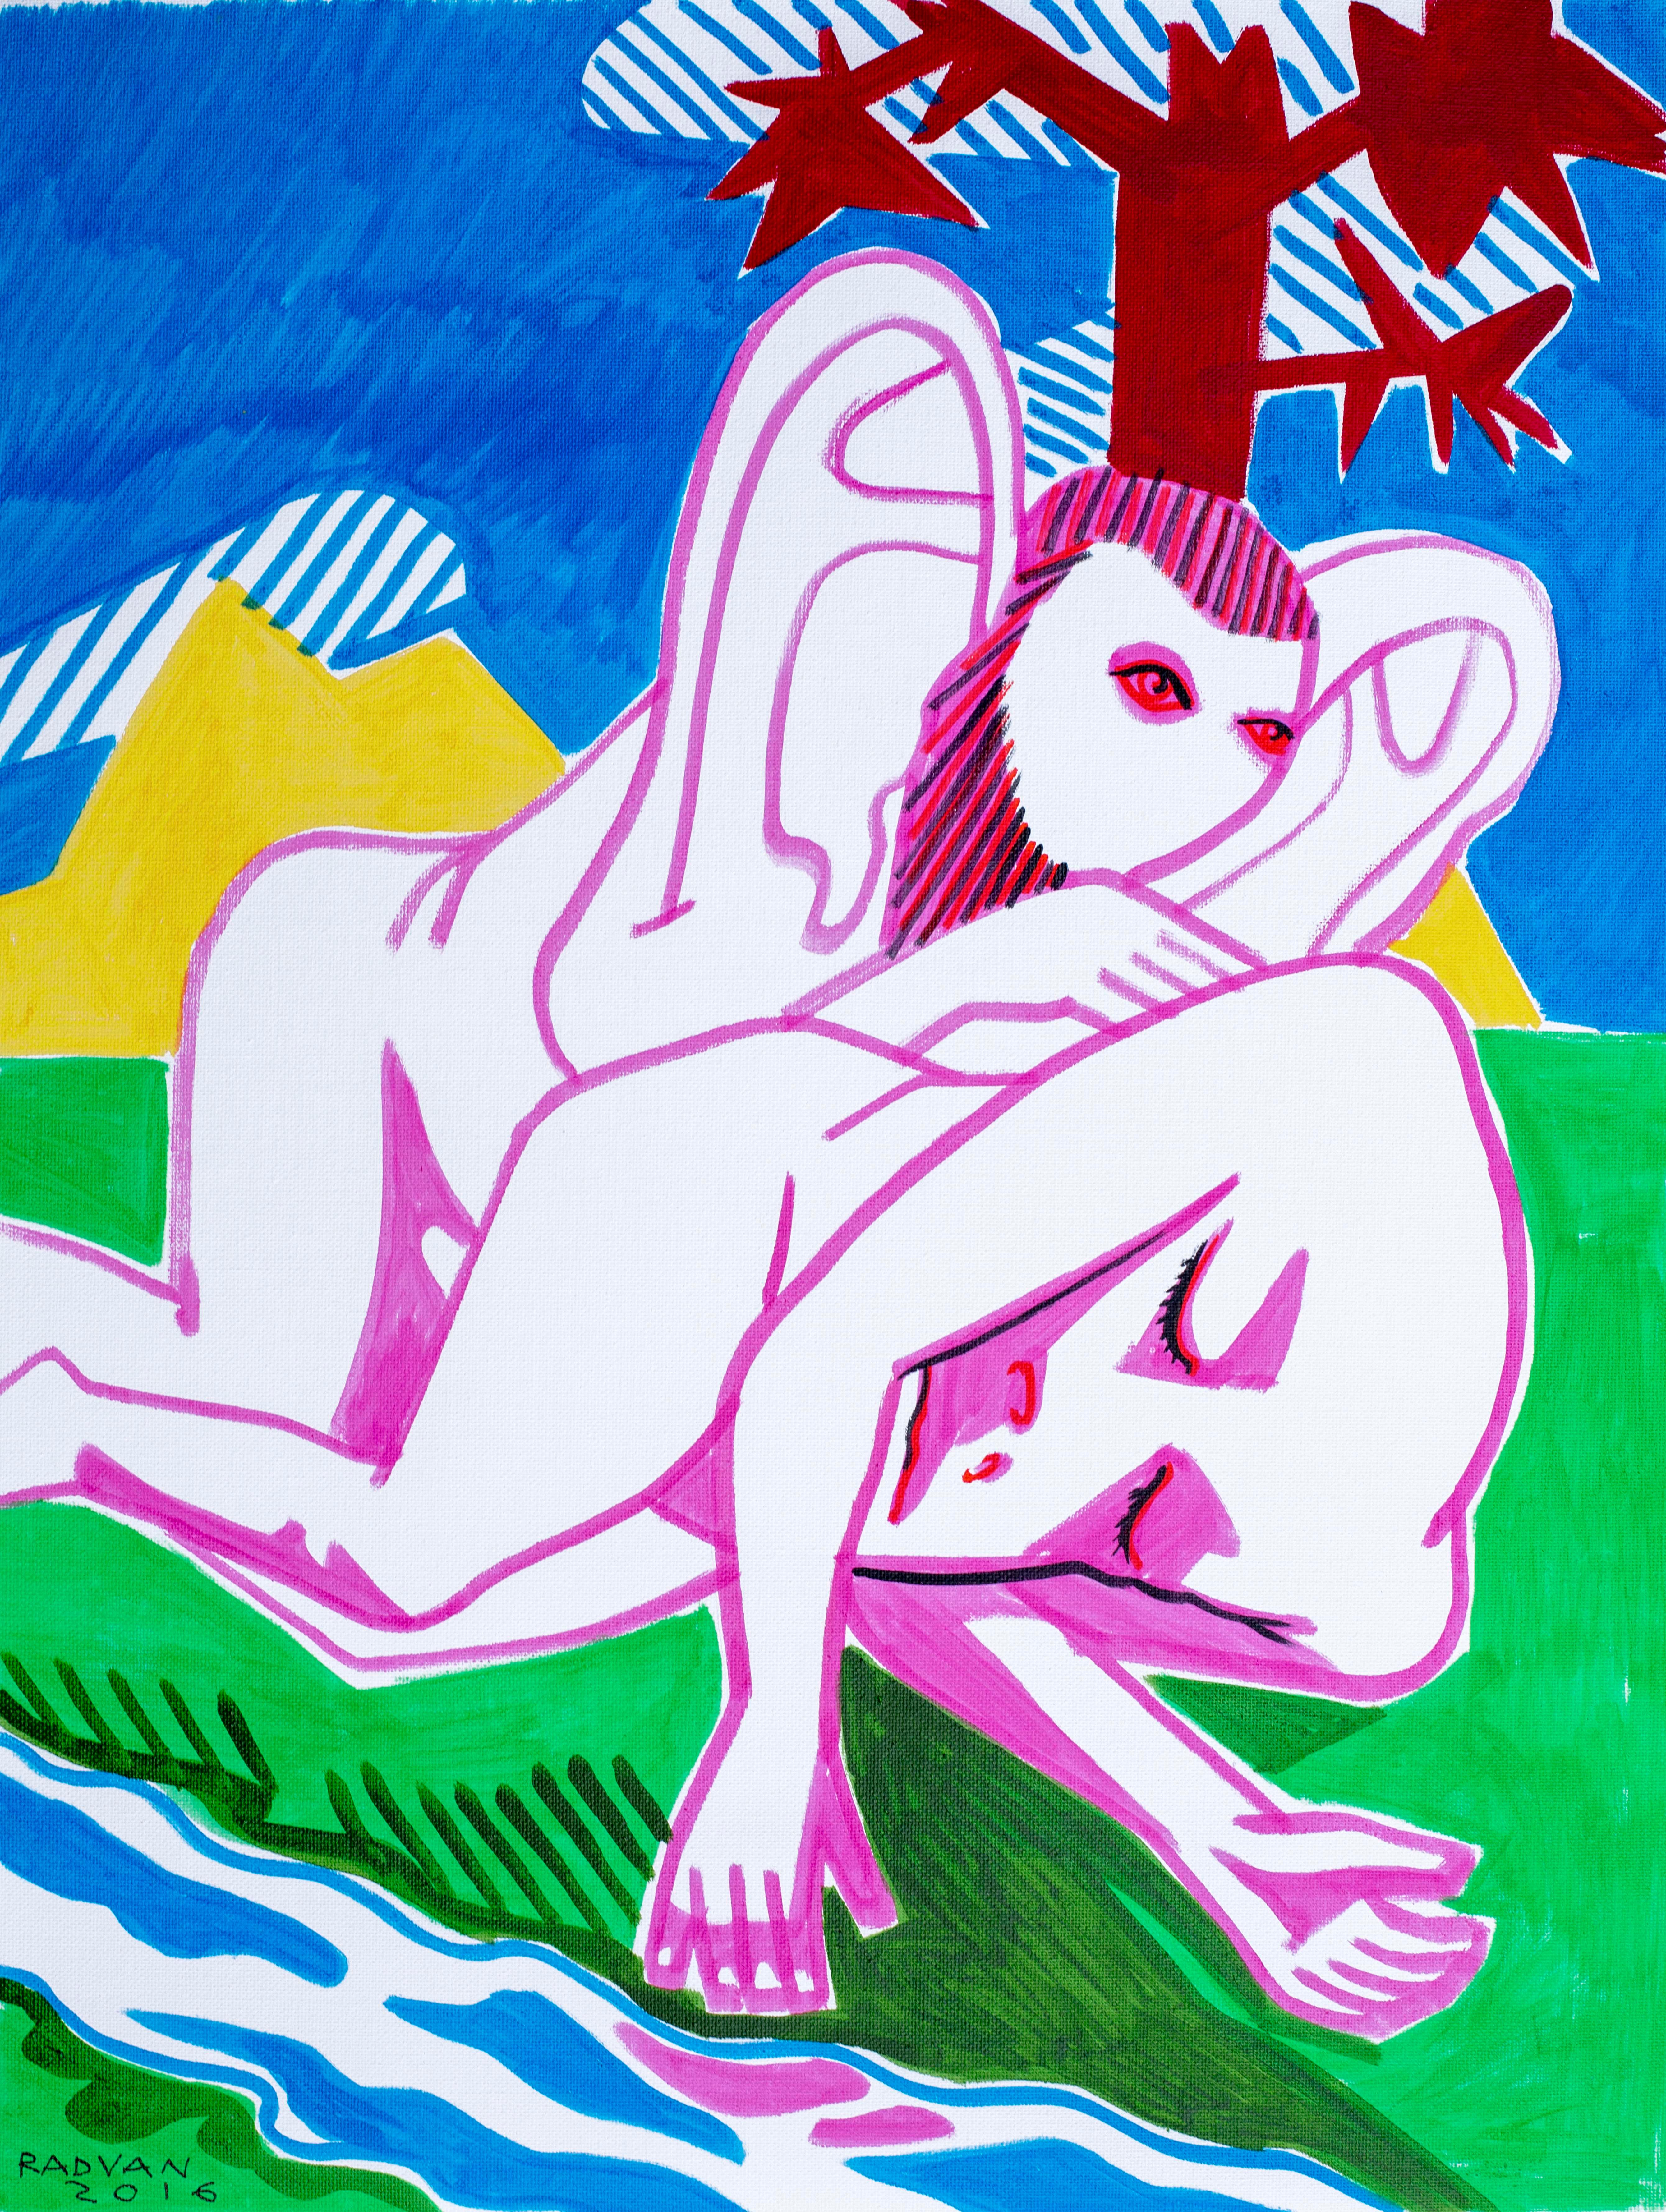 Alexandru Rădvan Nude Painting – Mythological VI (Panot und Blem) - Contemporary Art, Blau, Grün, Akt, Rosa